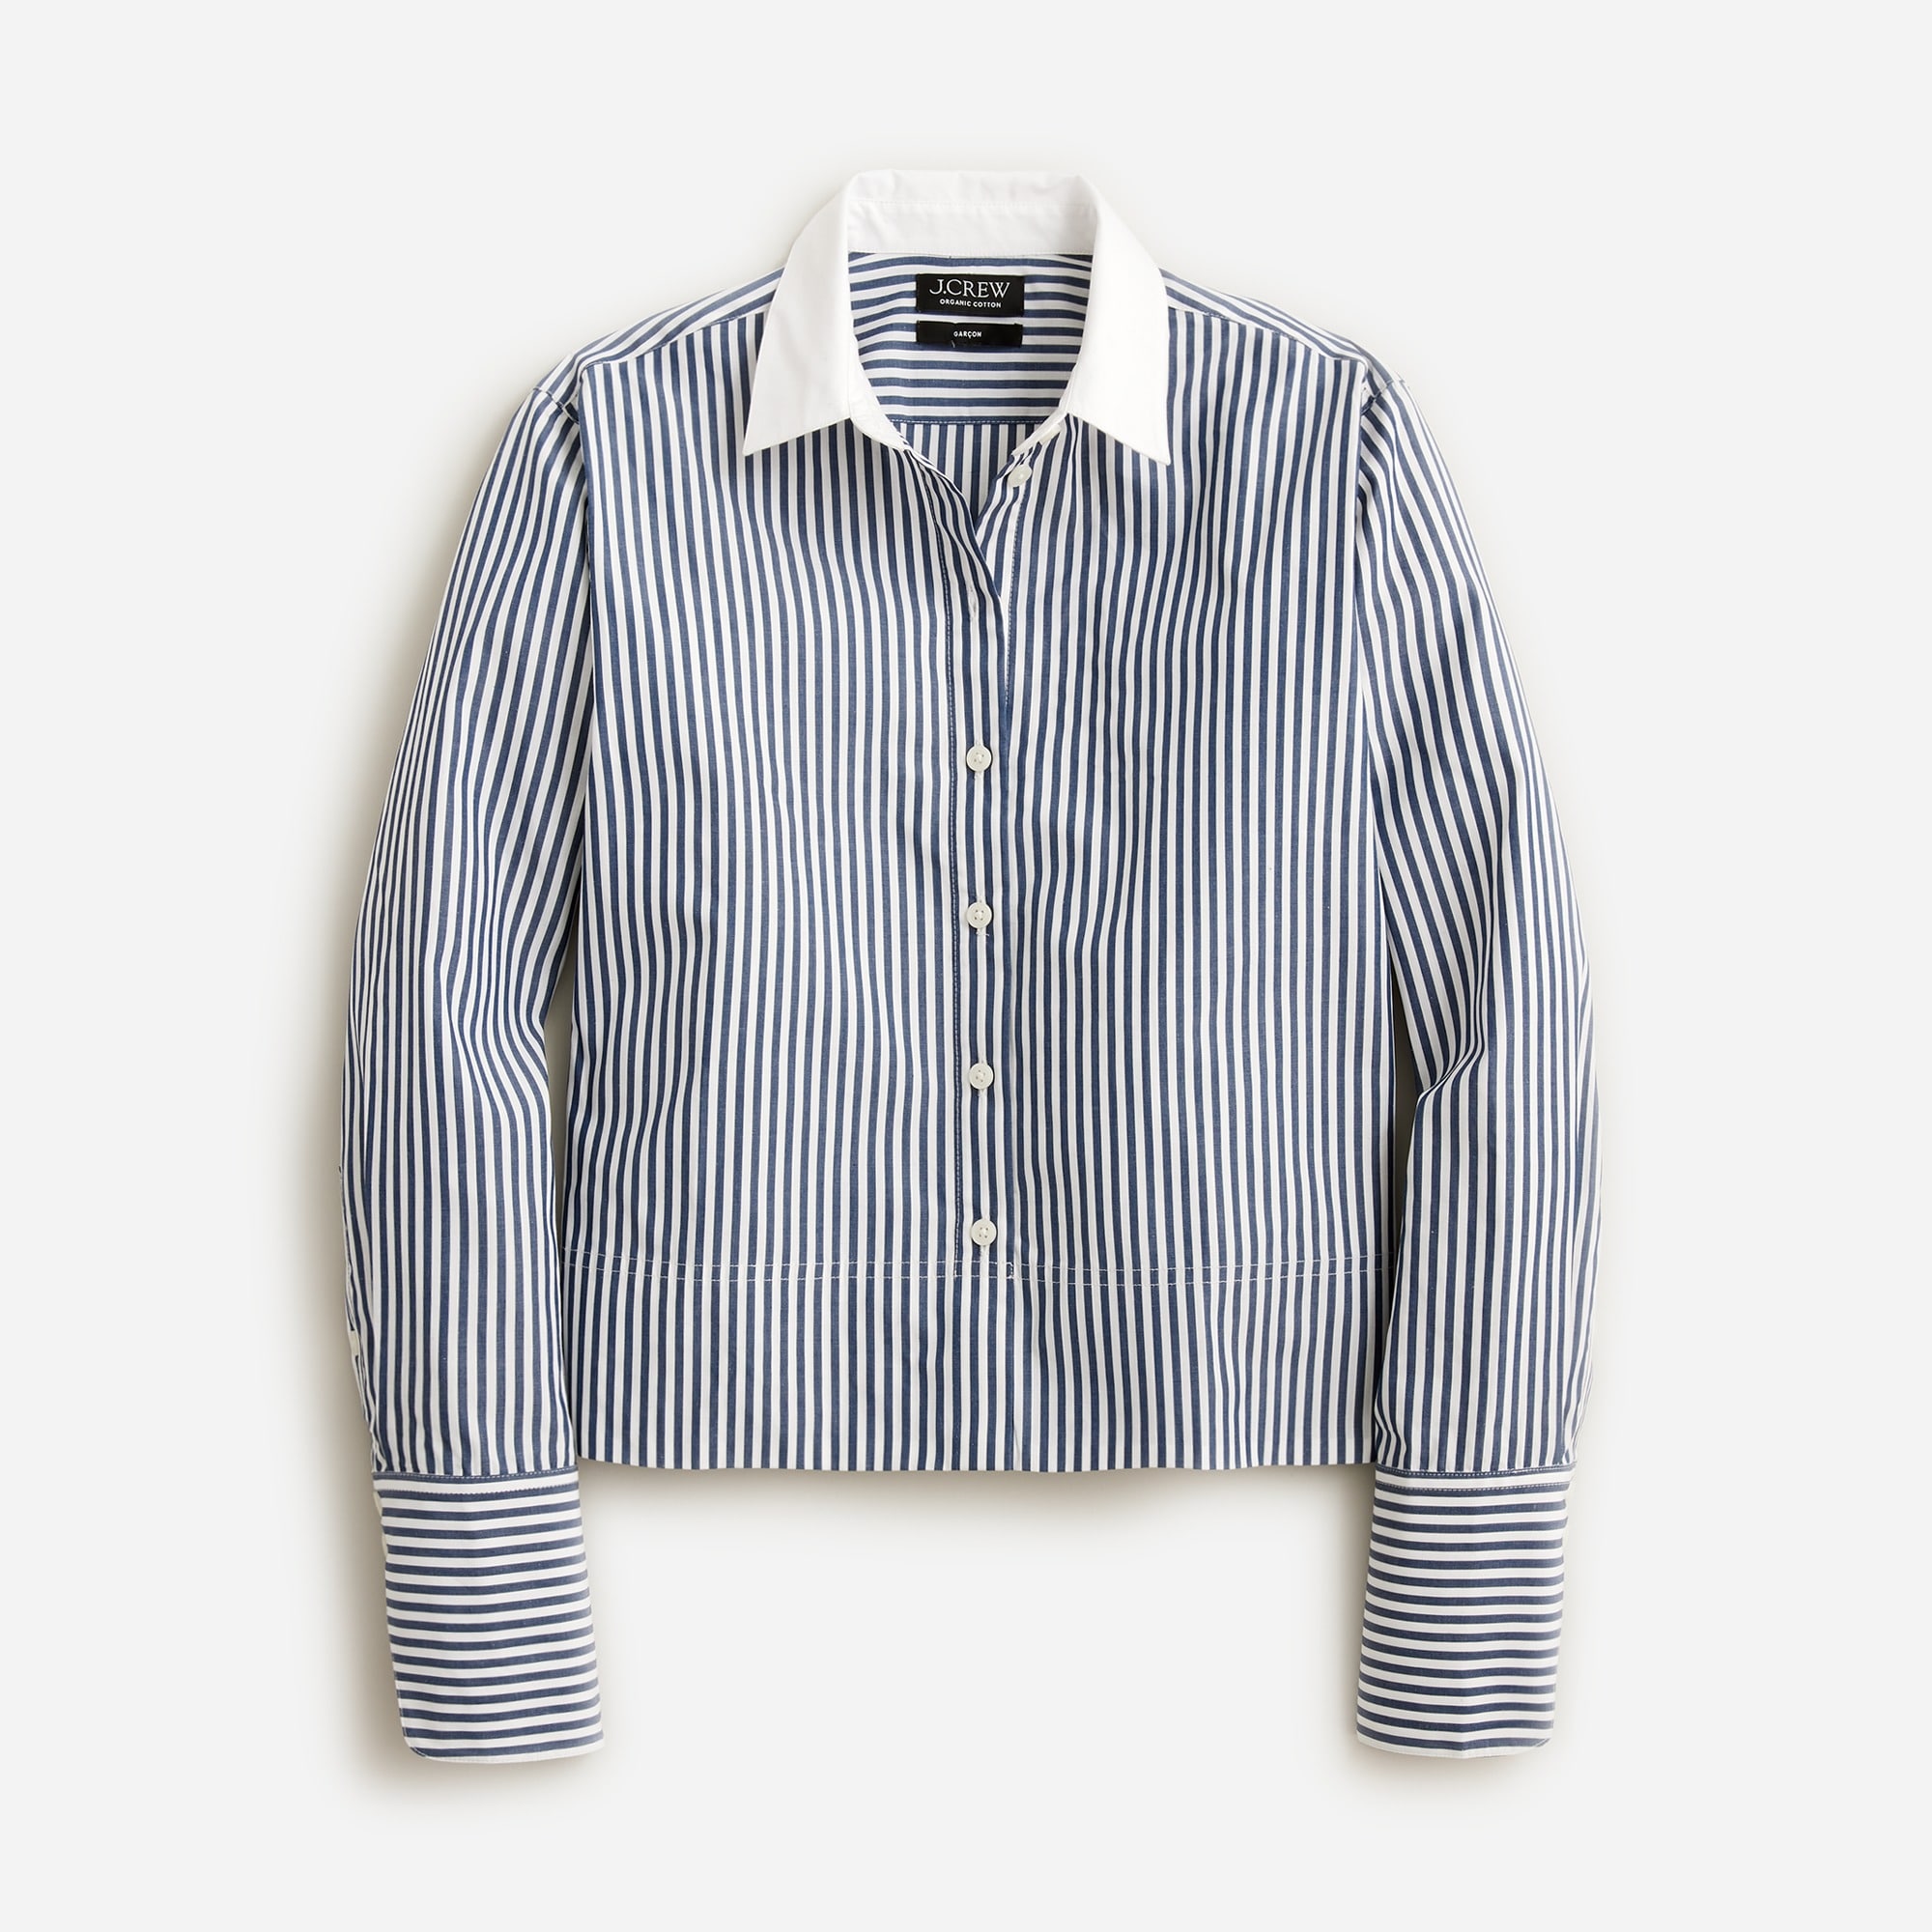  Cropped gar&ccedil;on shirt in striped print